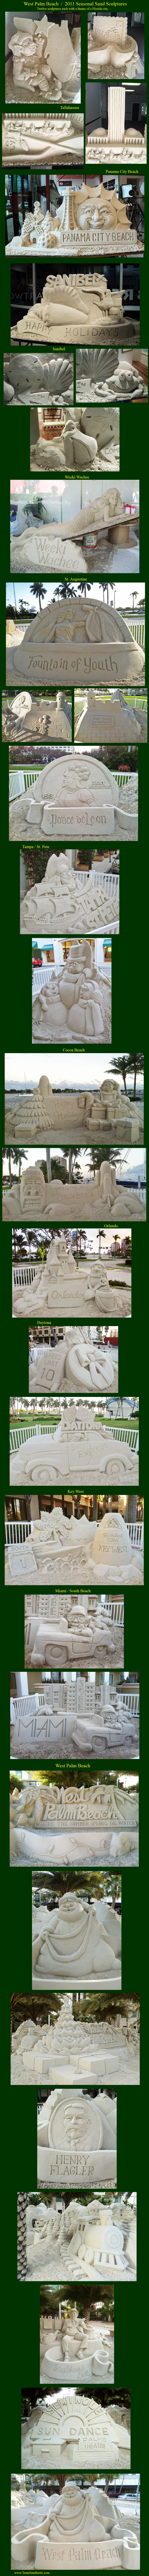 West Palm Beach Sand Sculpting